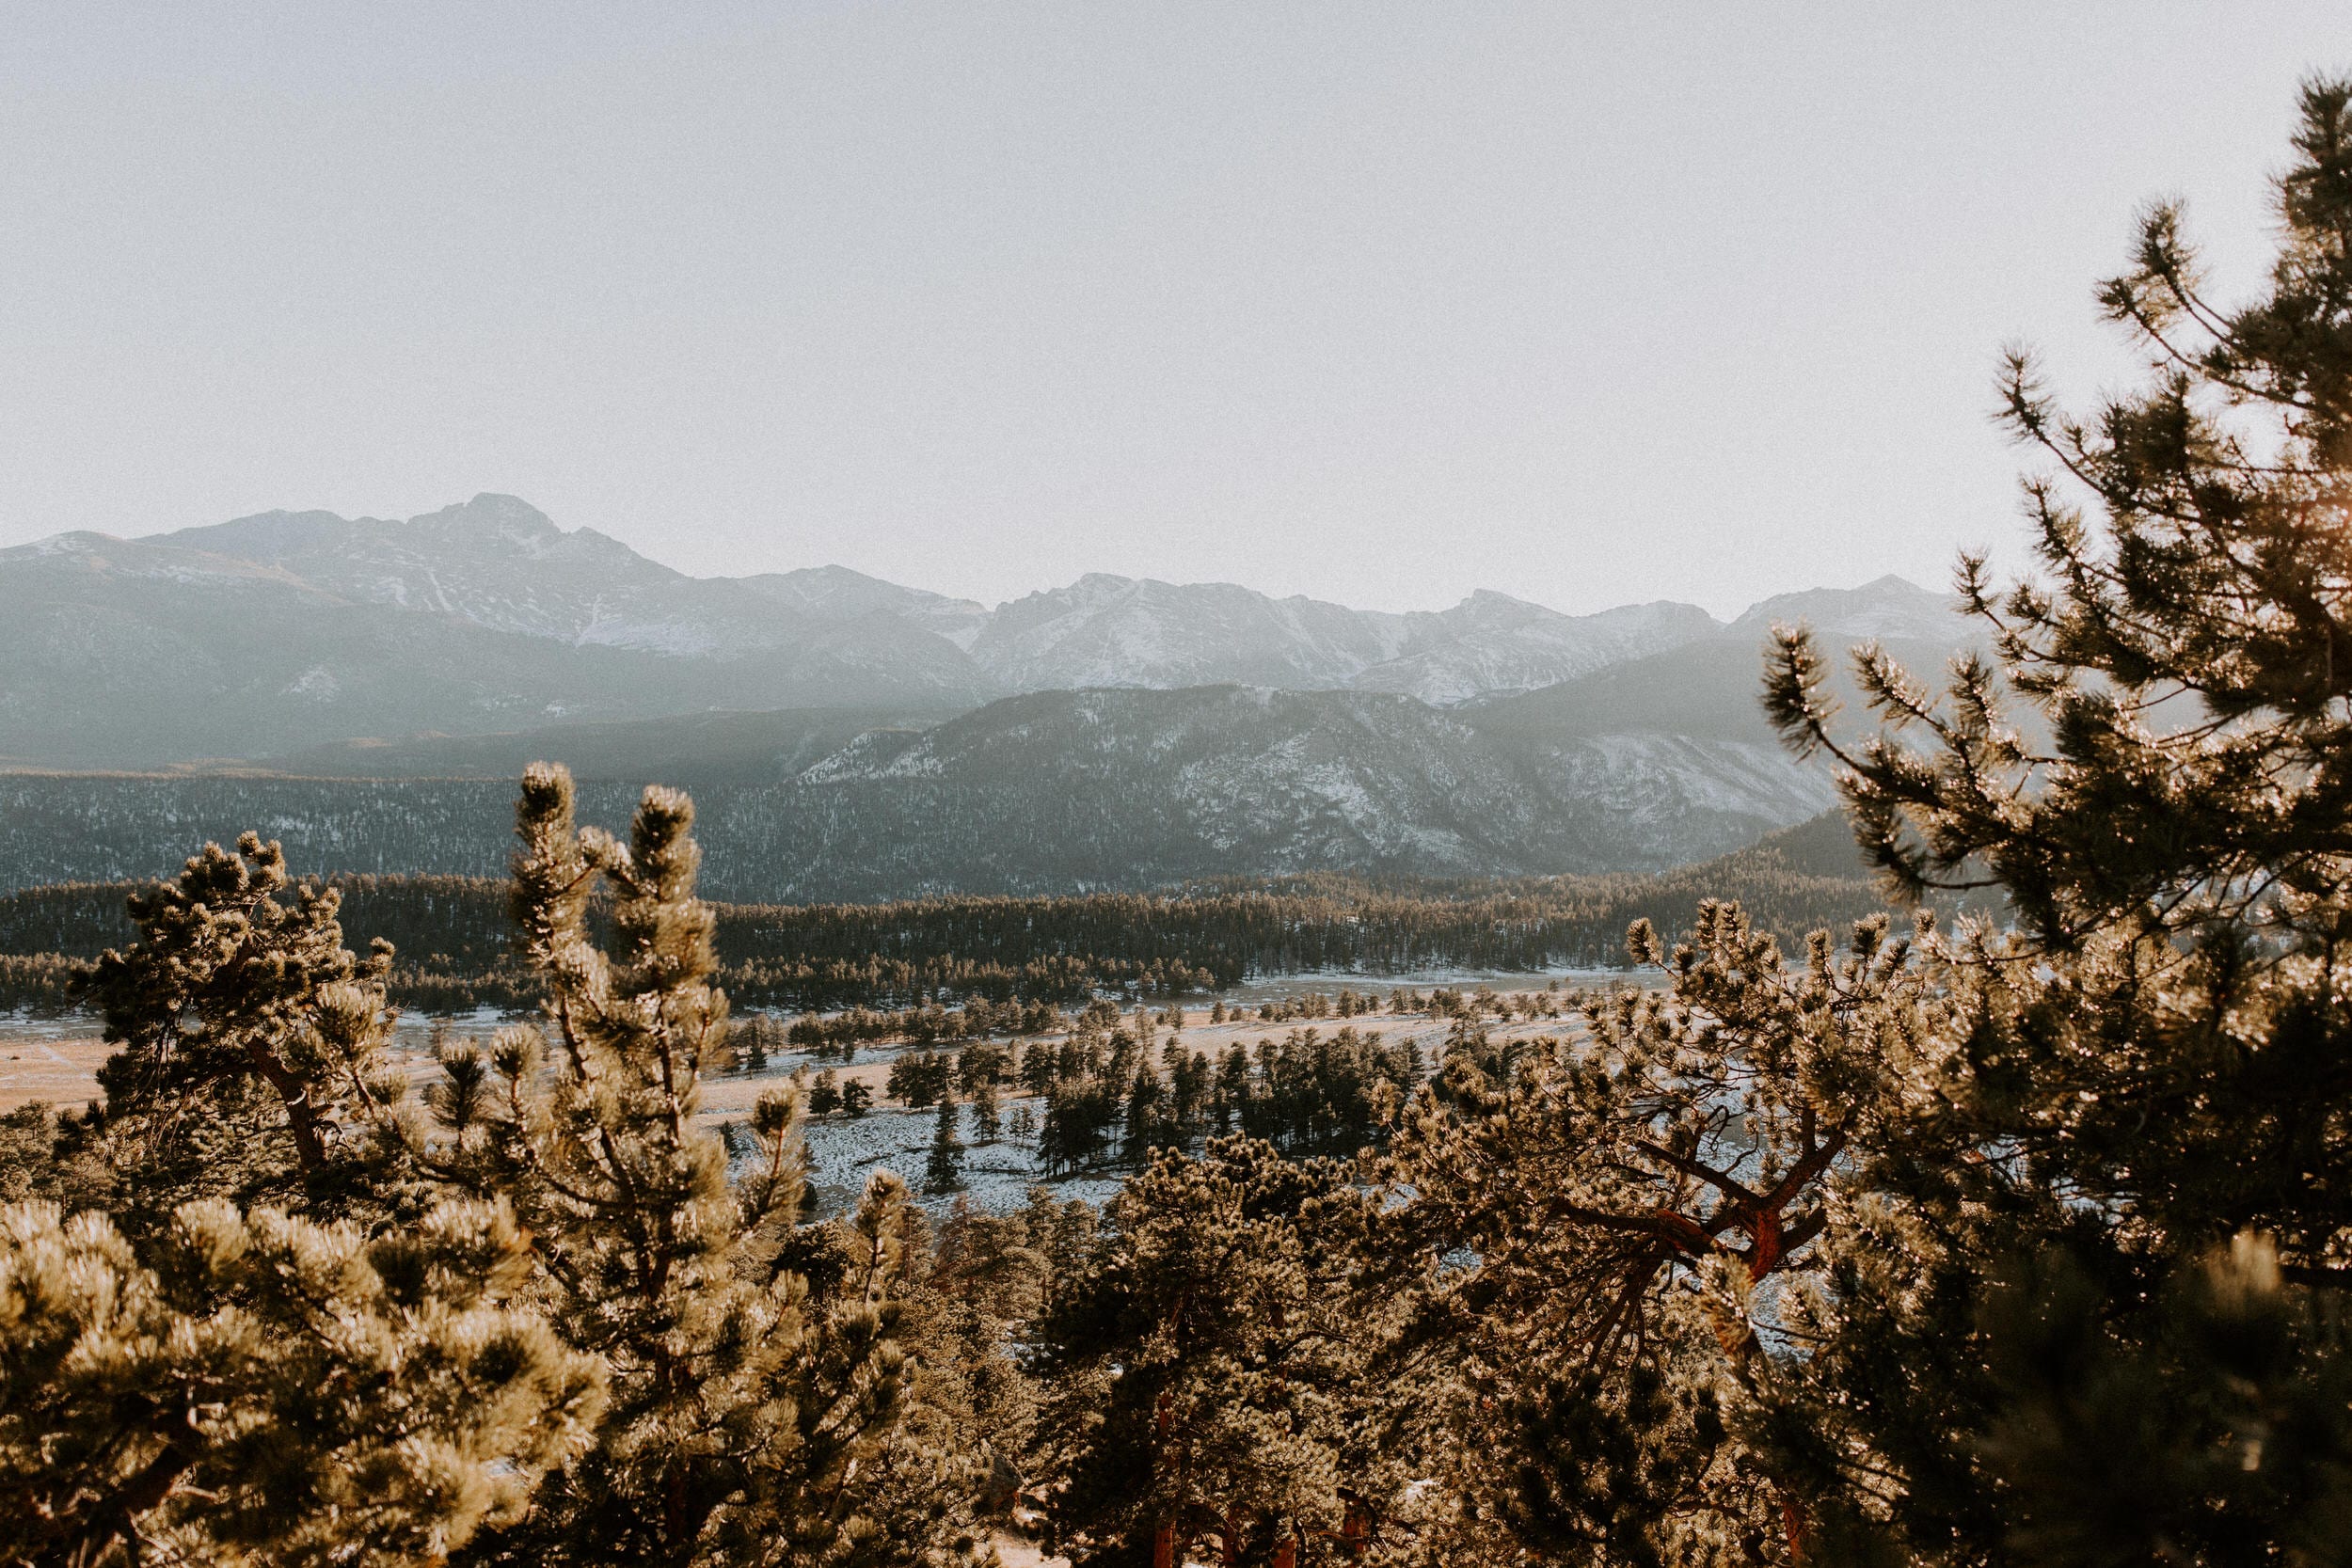 Rocky Mountain, Destination, Engagement Session, Josh Rexford